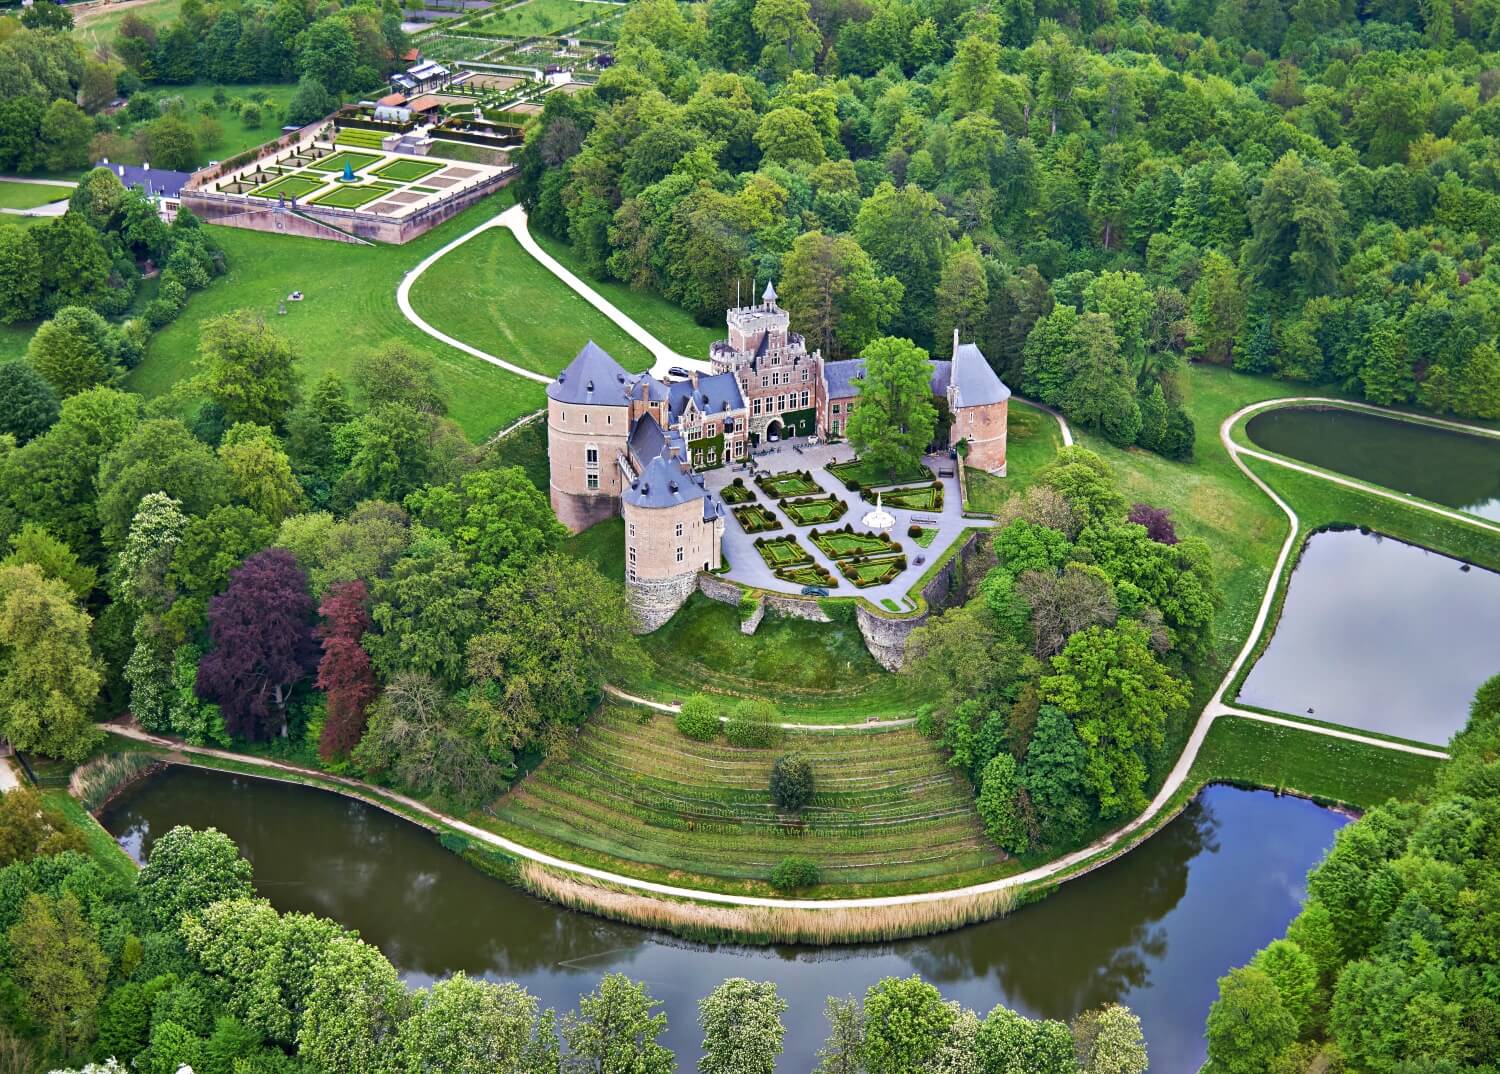 Gaasbeek Castle
